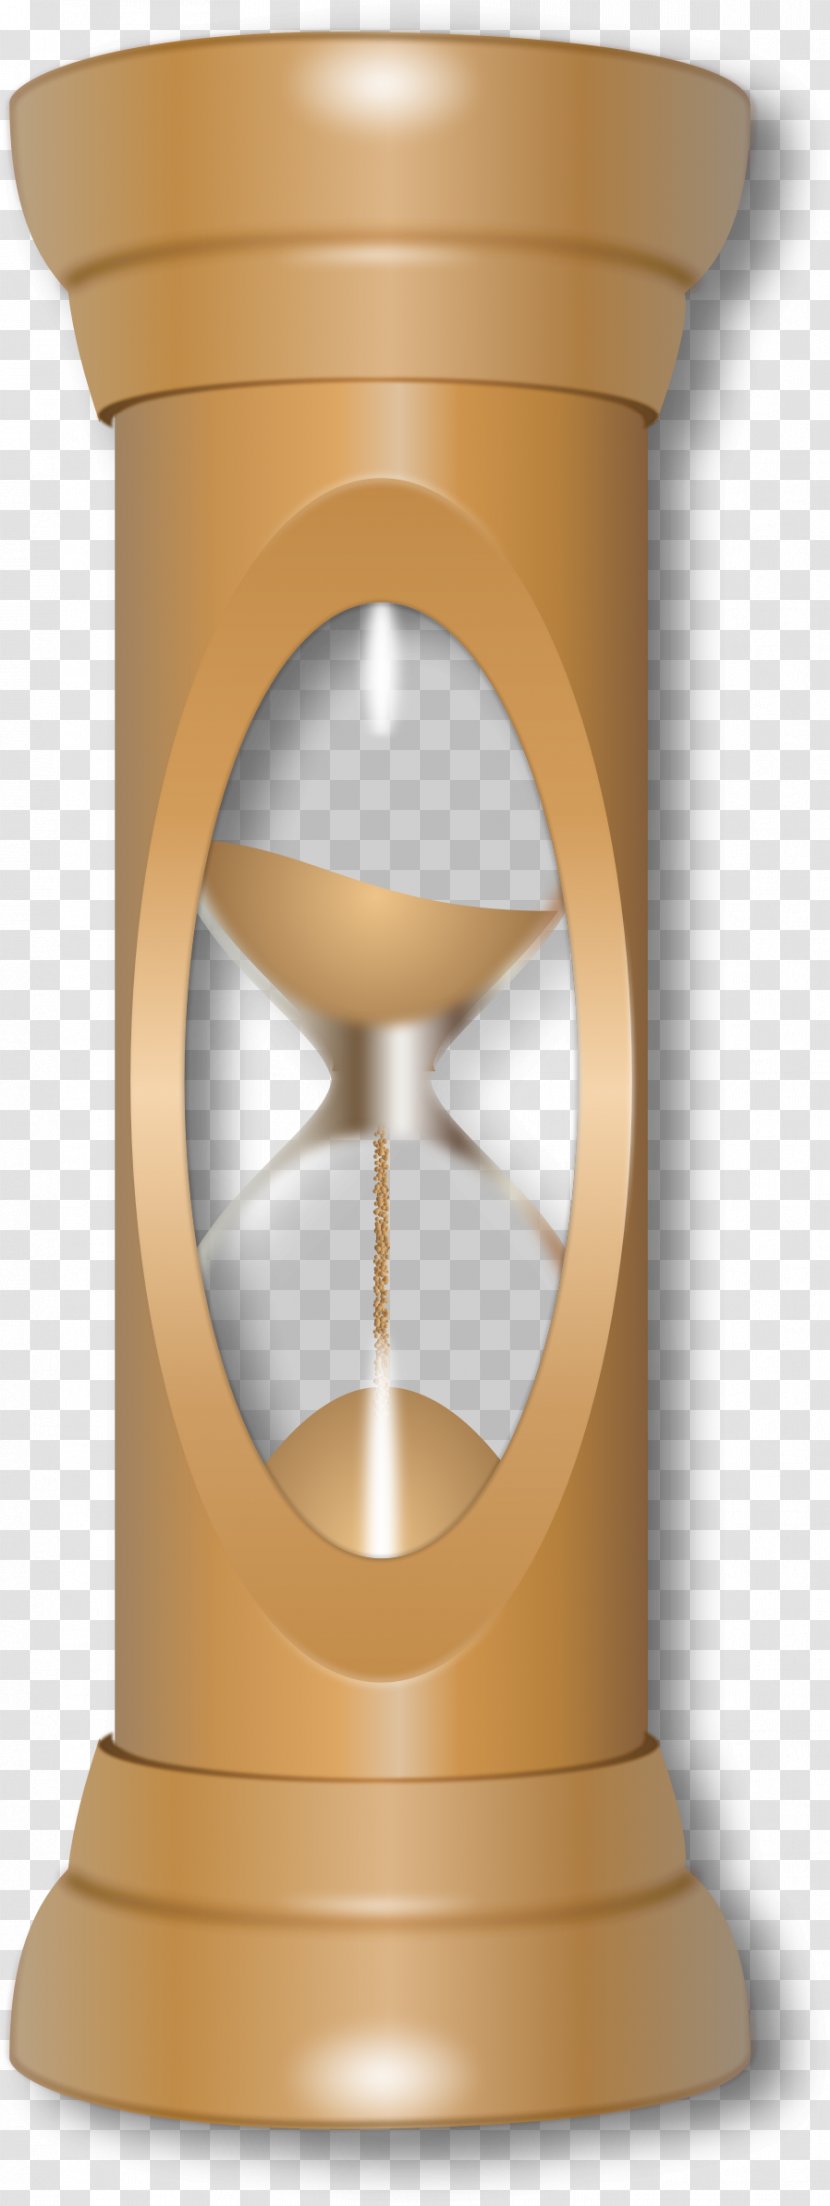 Hourglass Time & Attendance Clocks - Present Transparent PNG